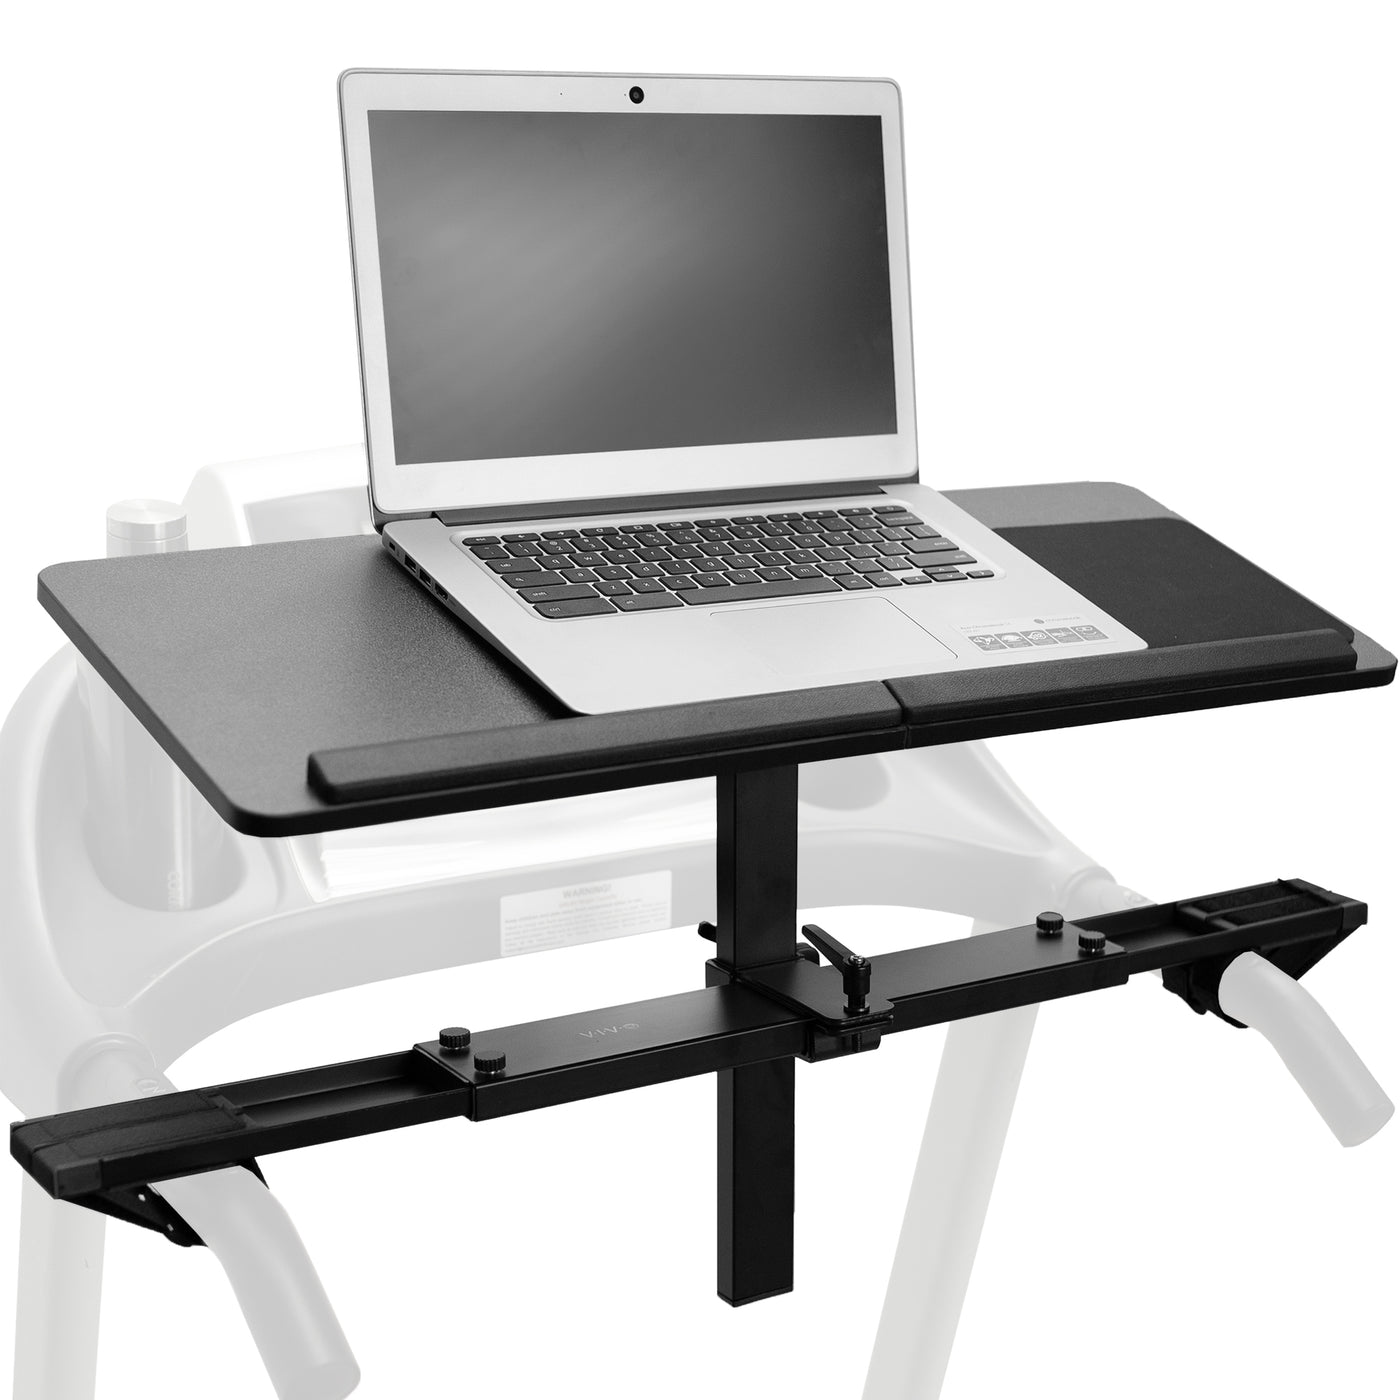 Sturdy height adjustable laptop desk riser platform for a treadmill. 